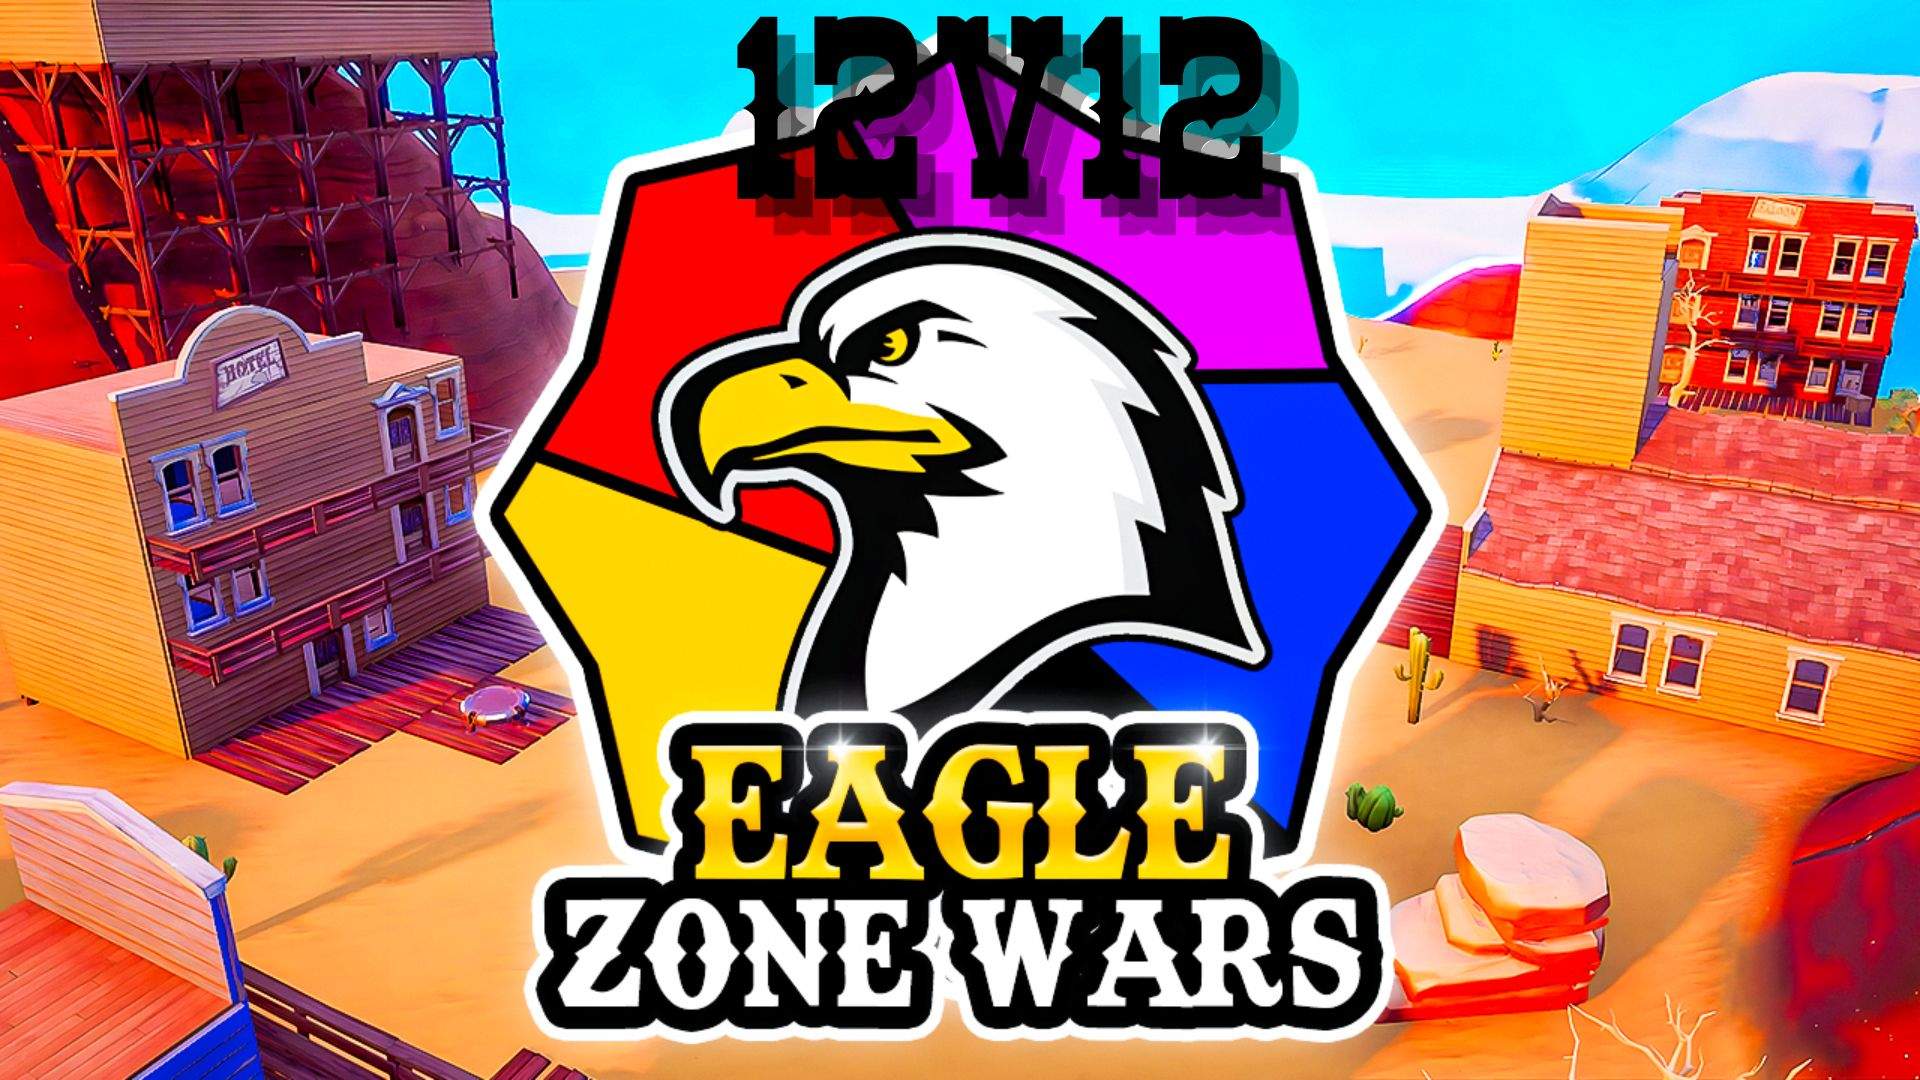 Eagle Zone Wars 12V12